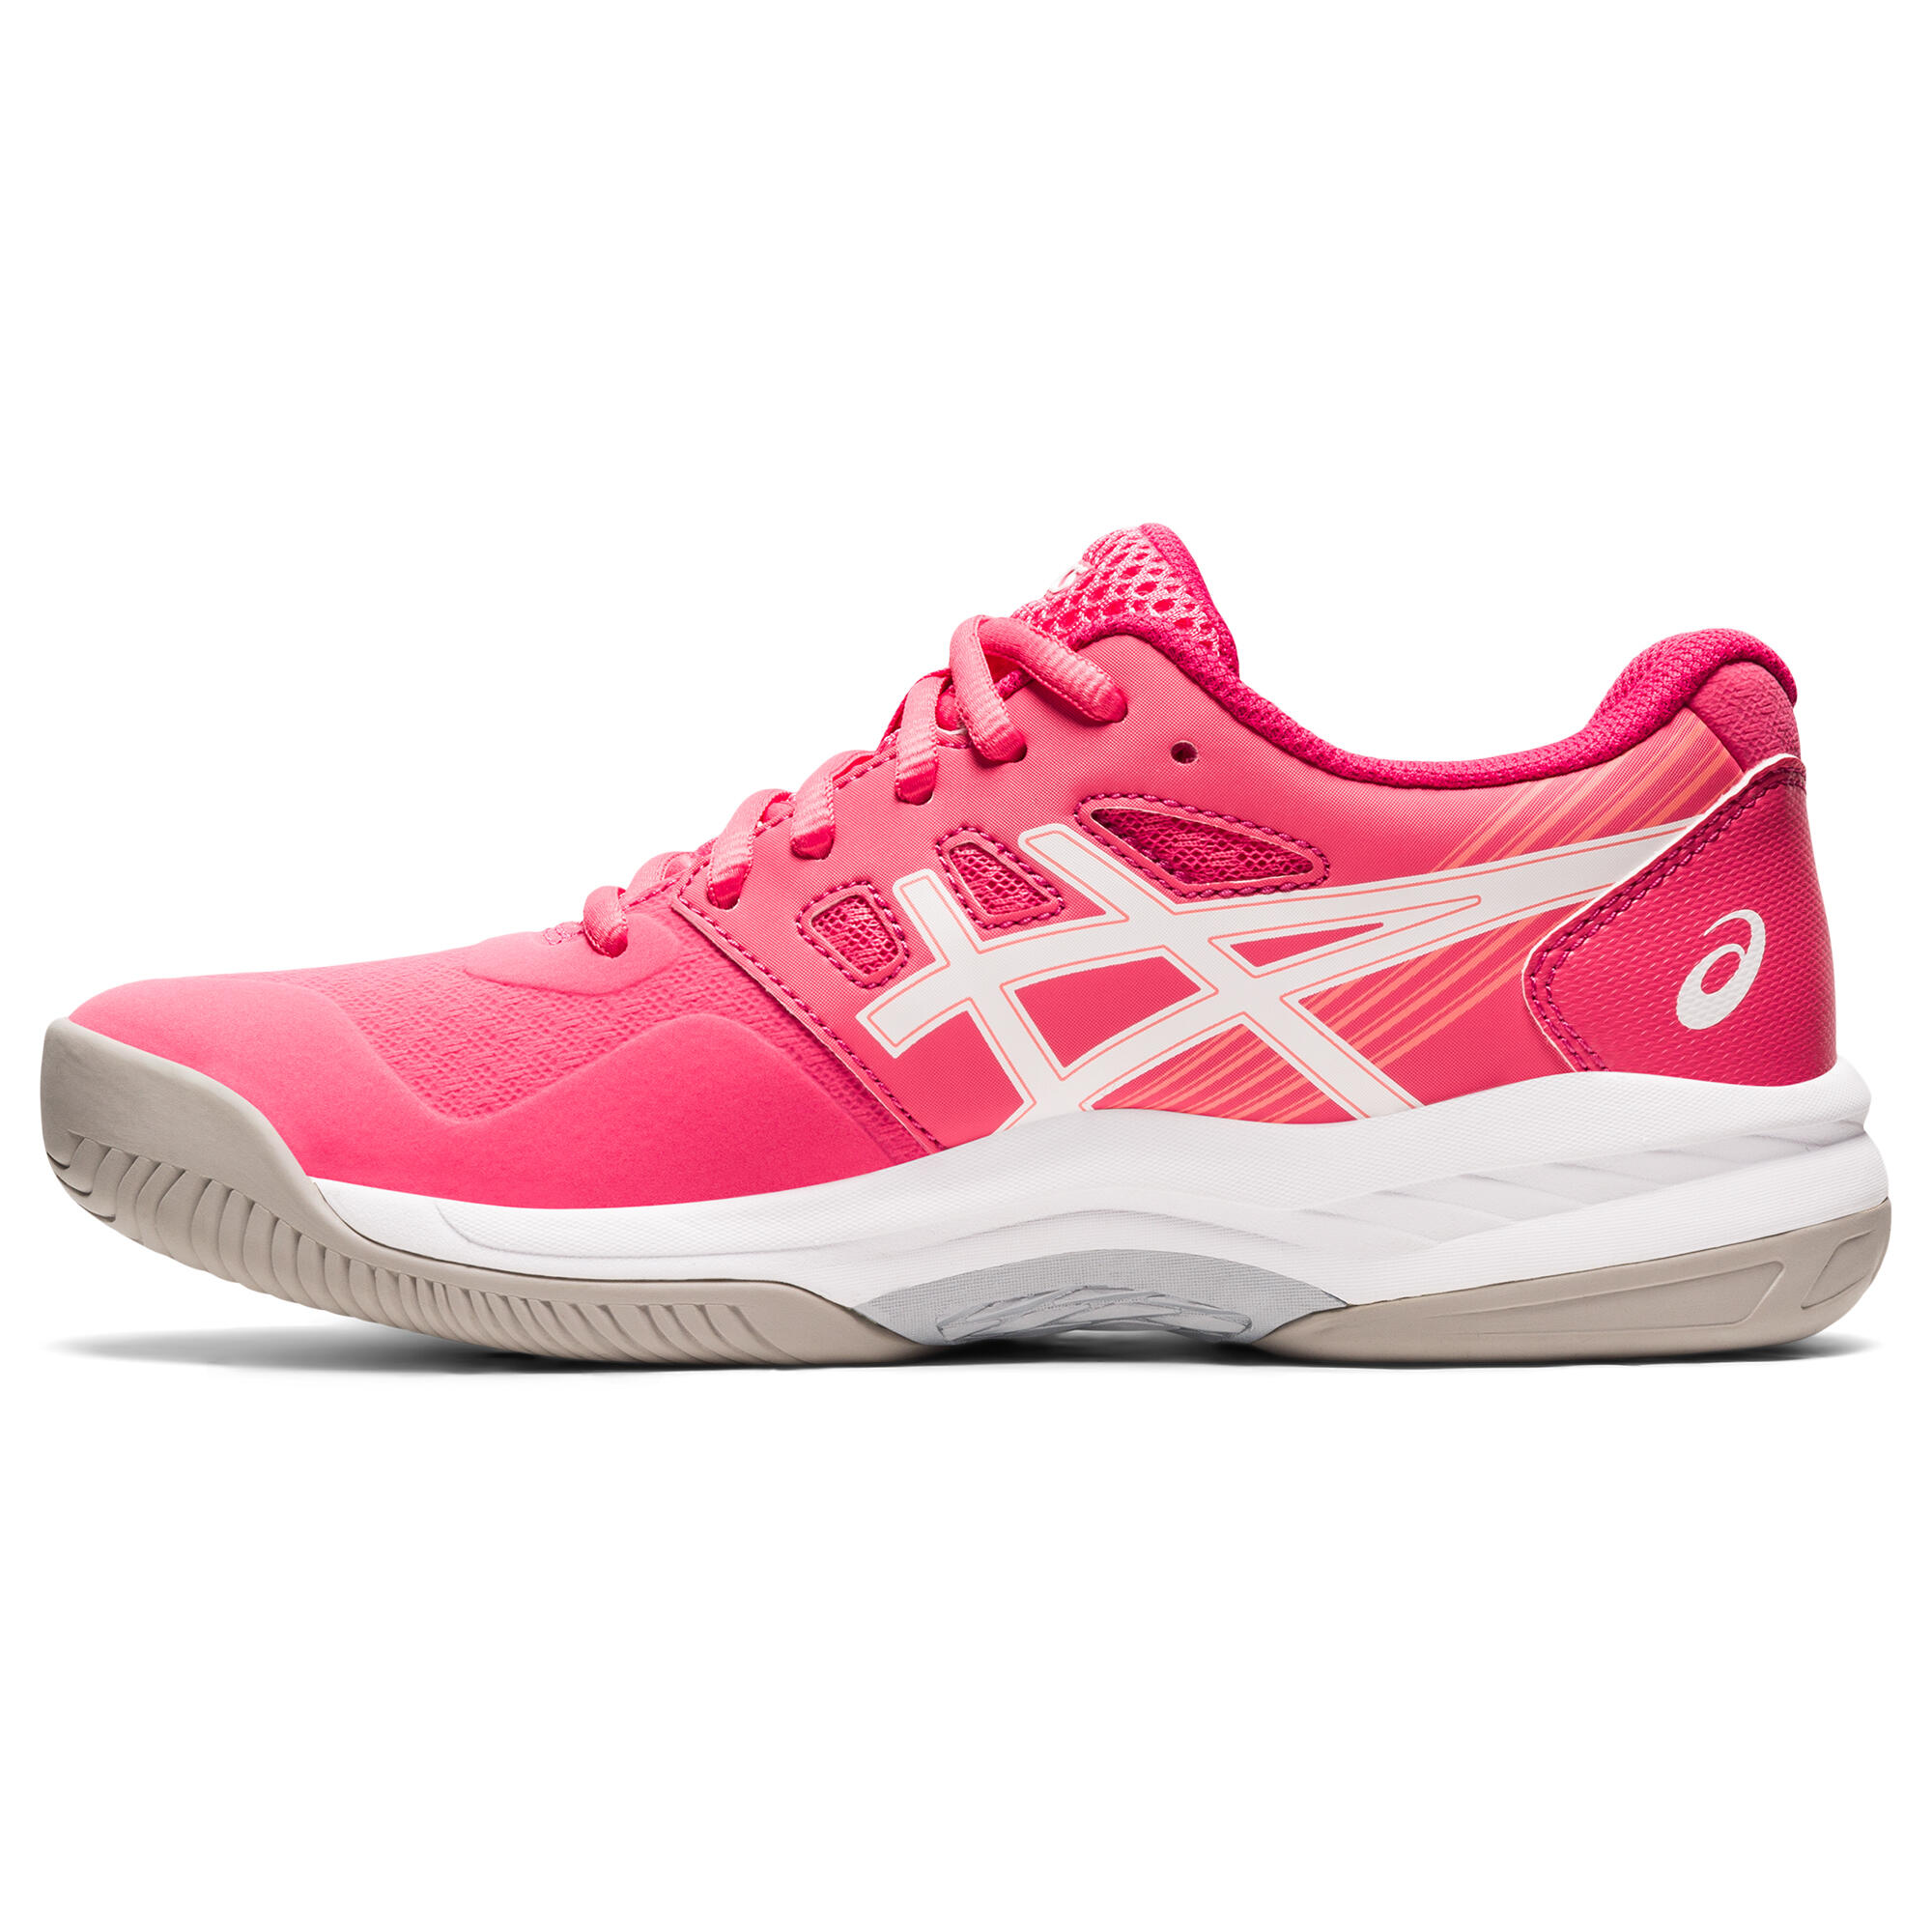 Women's Tennis Shoes Gel Game - Pink/White 2/7